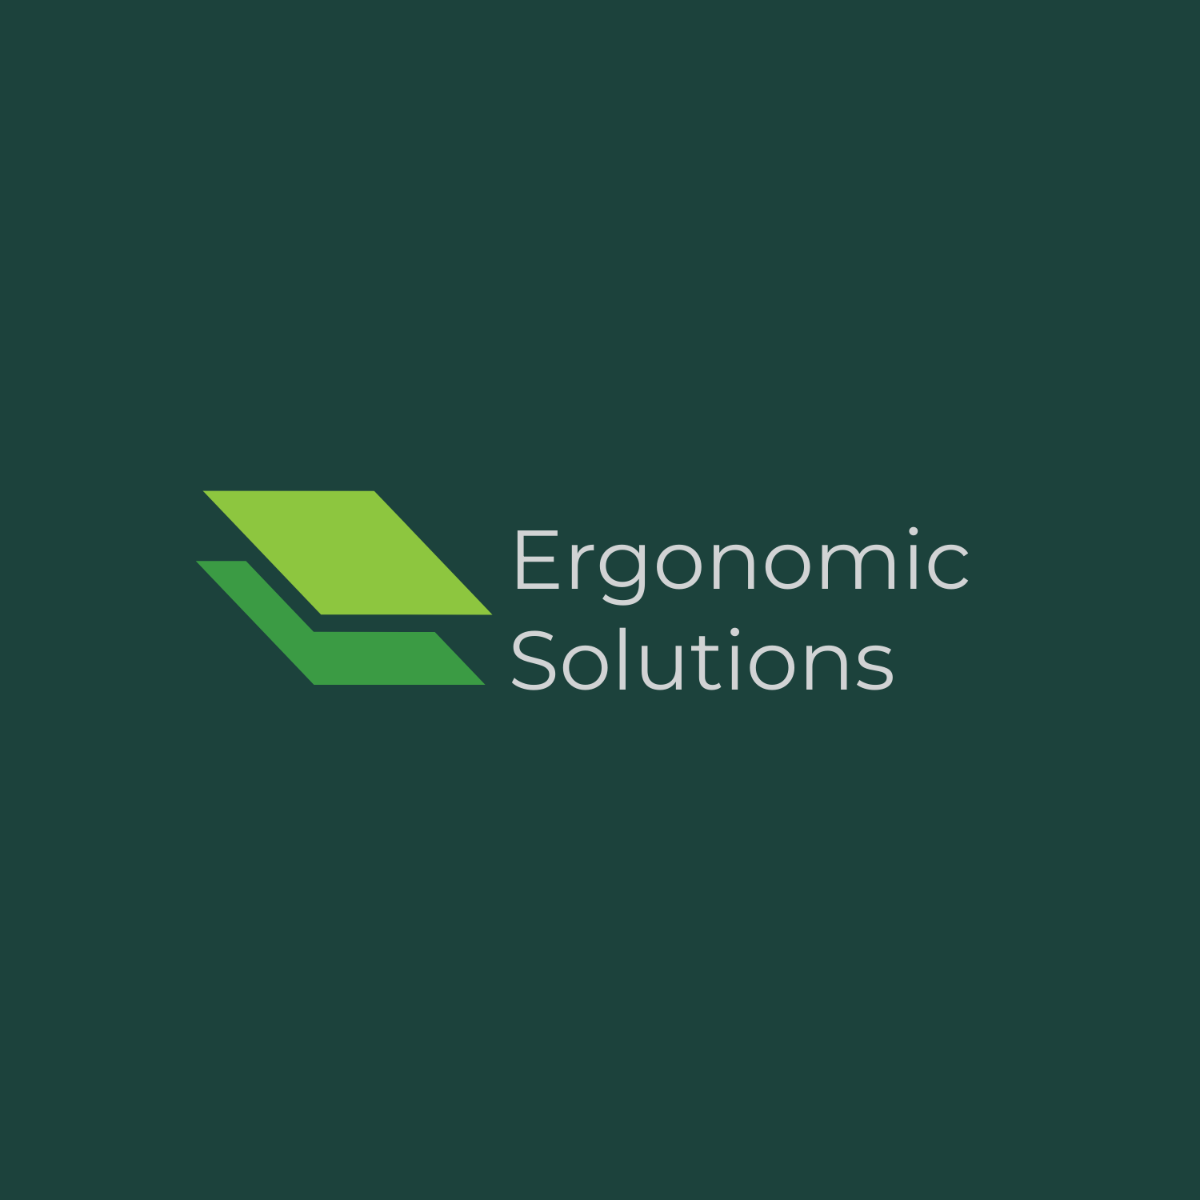 Ergonomic Solutions Logo Template